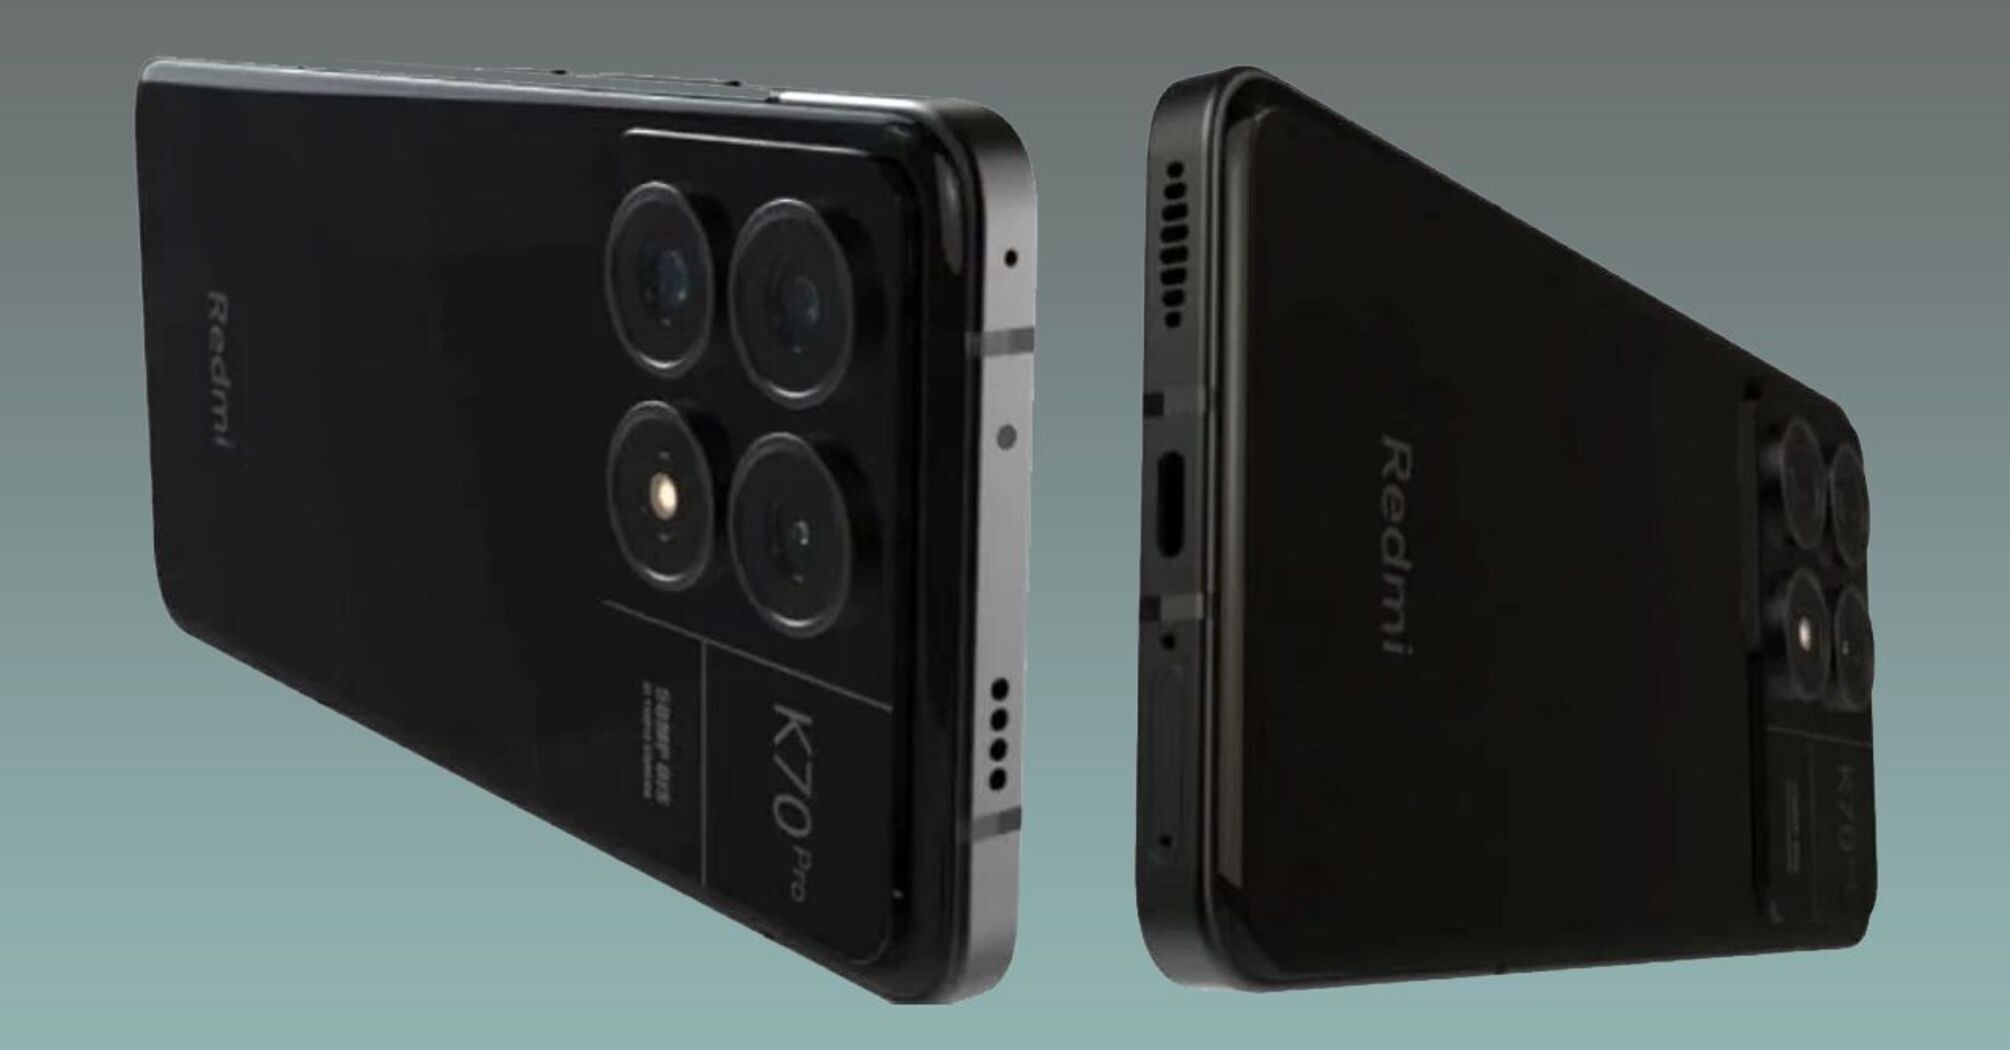 Redmi K70E smartphone: display and performance